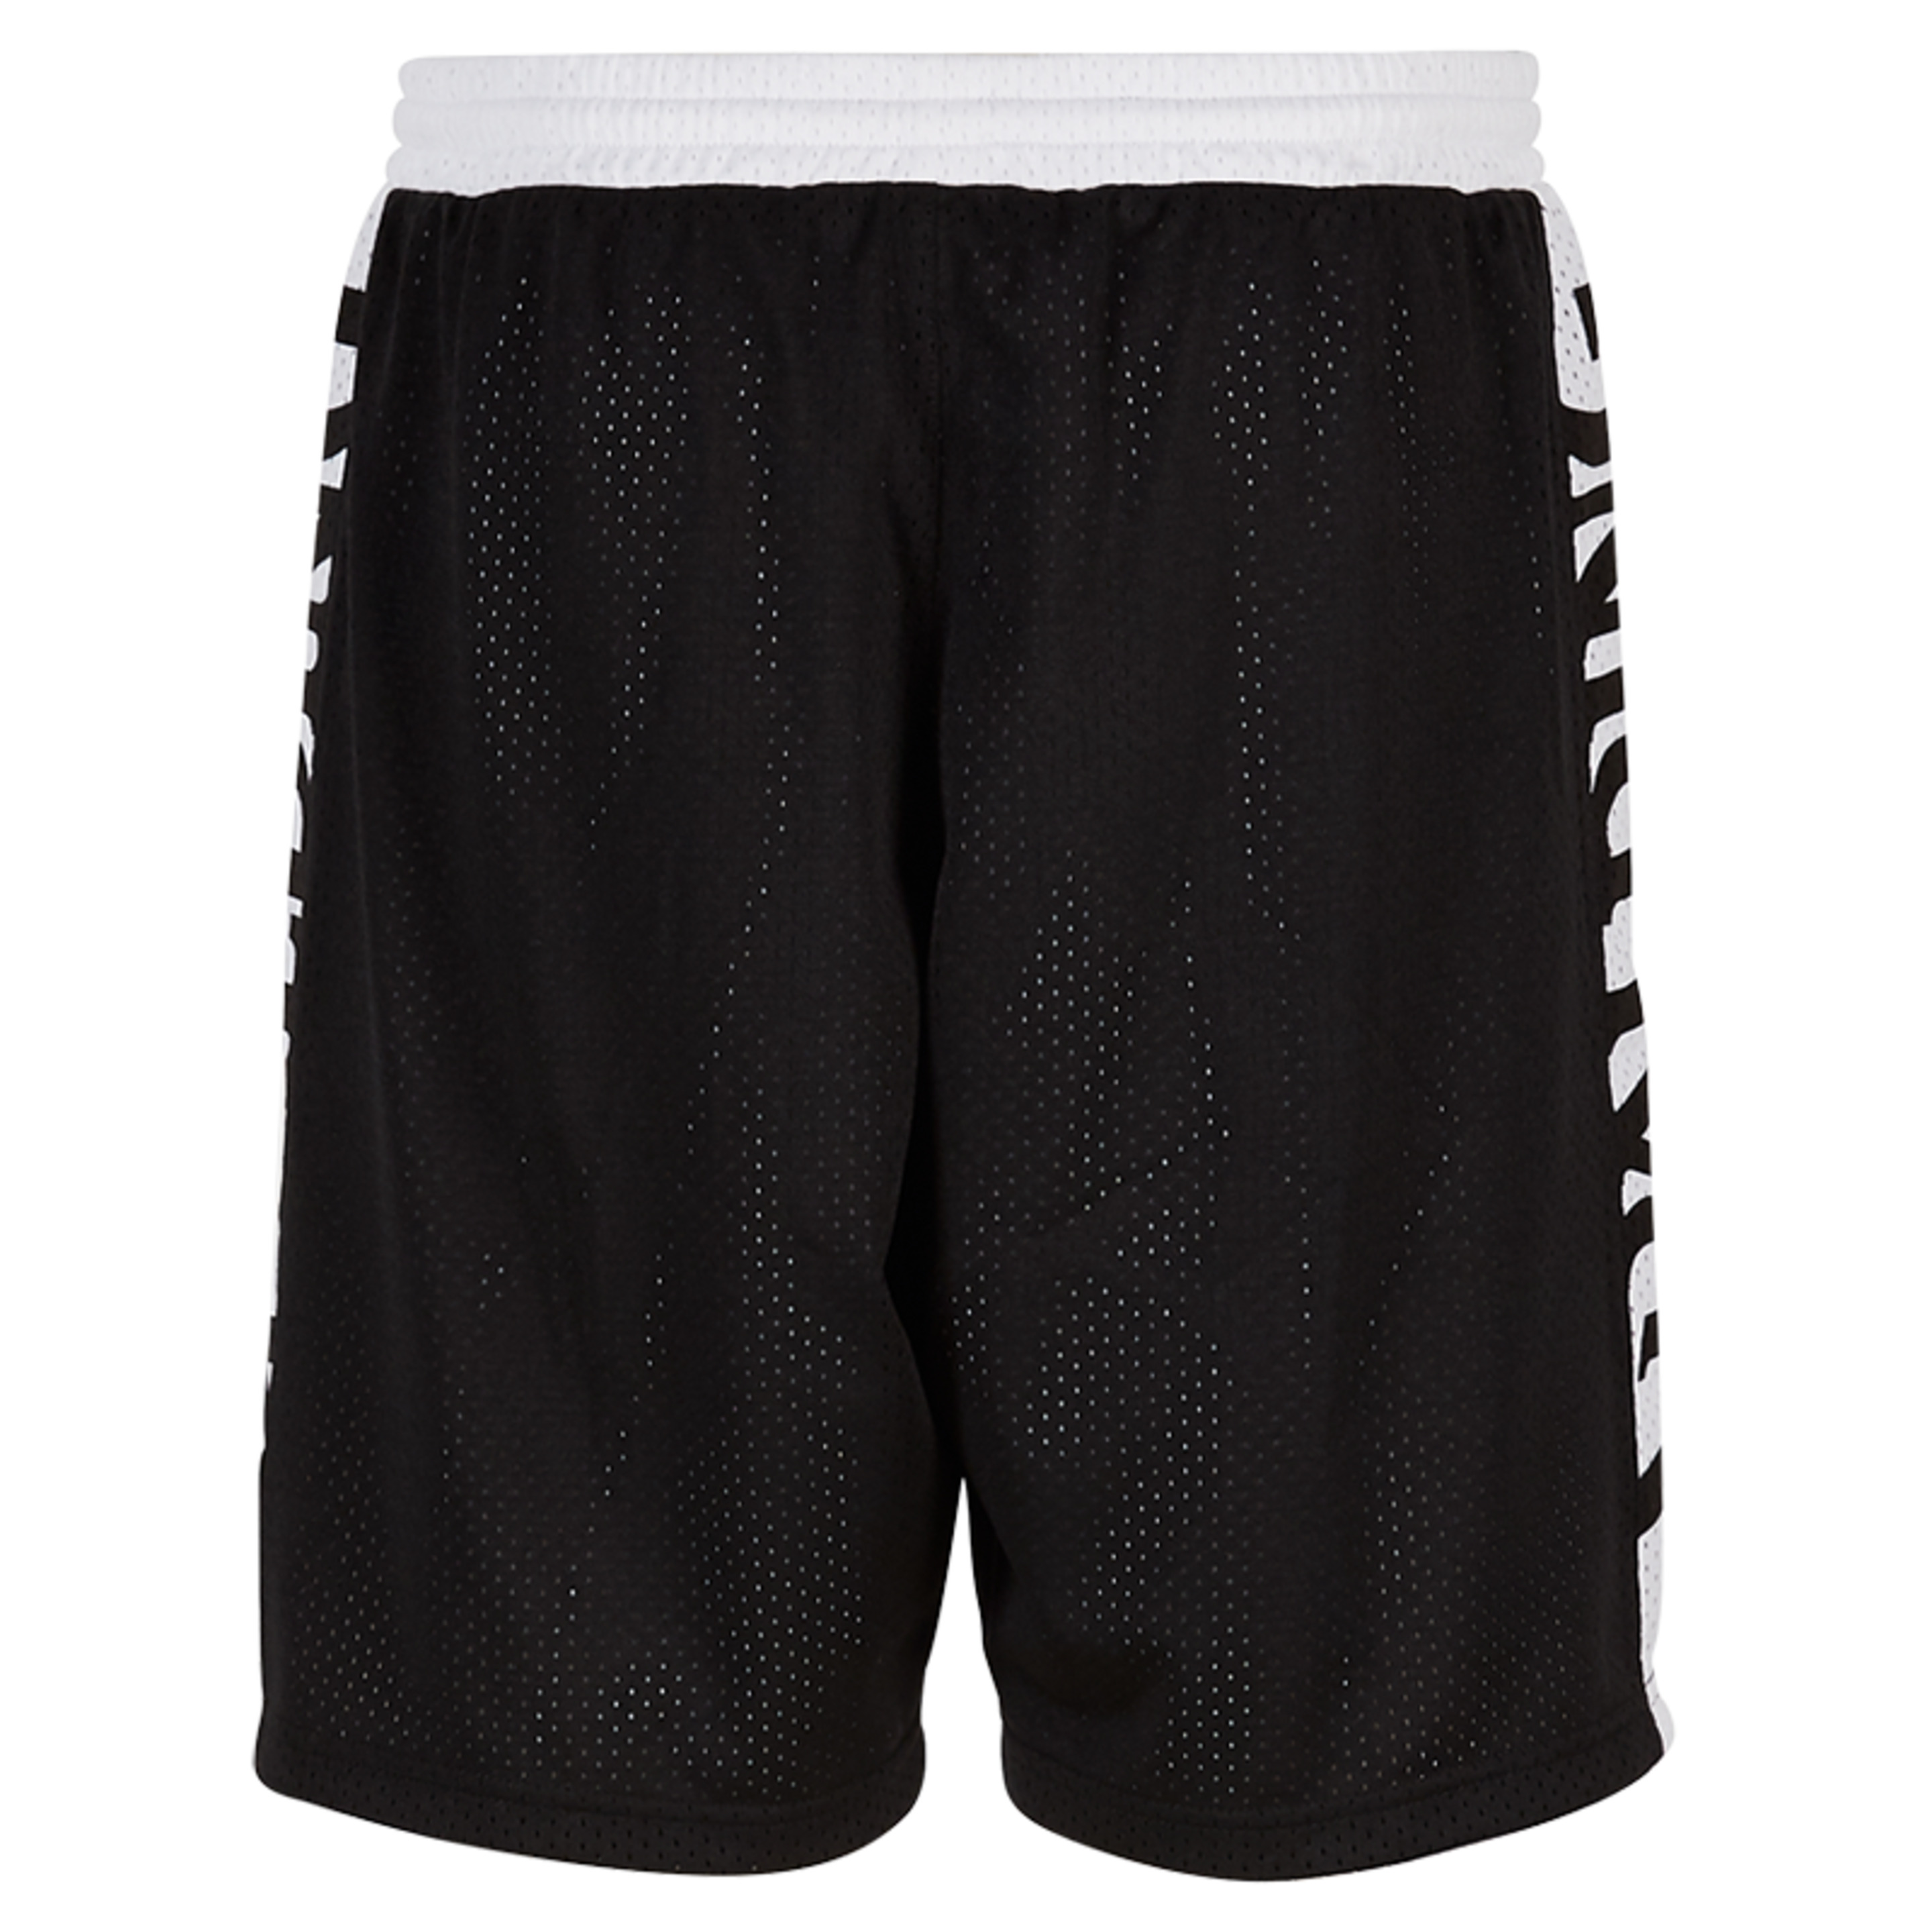 Essential Reversible Shorts 4her Black Spalding